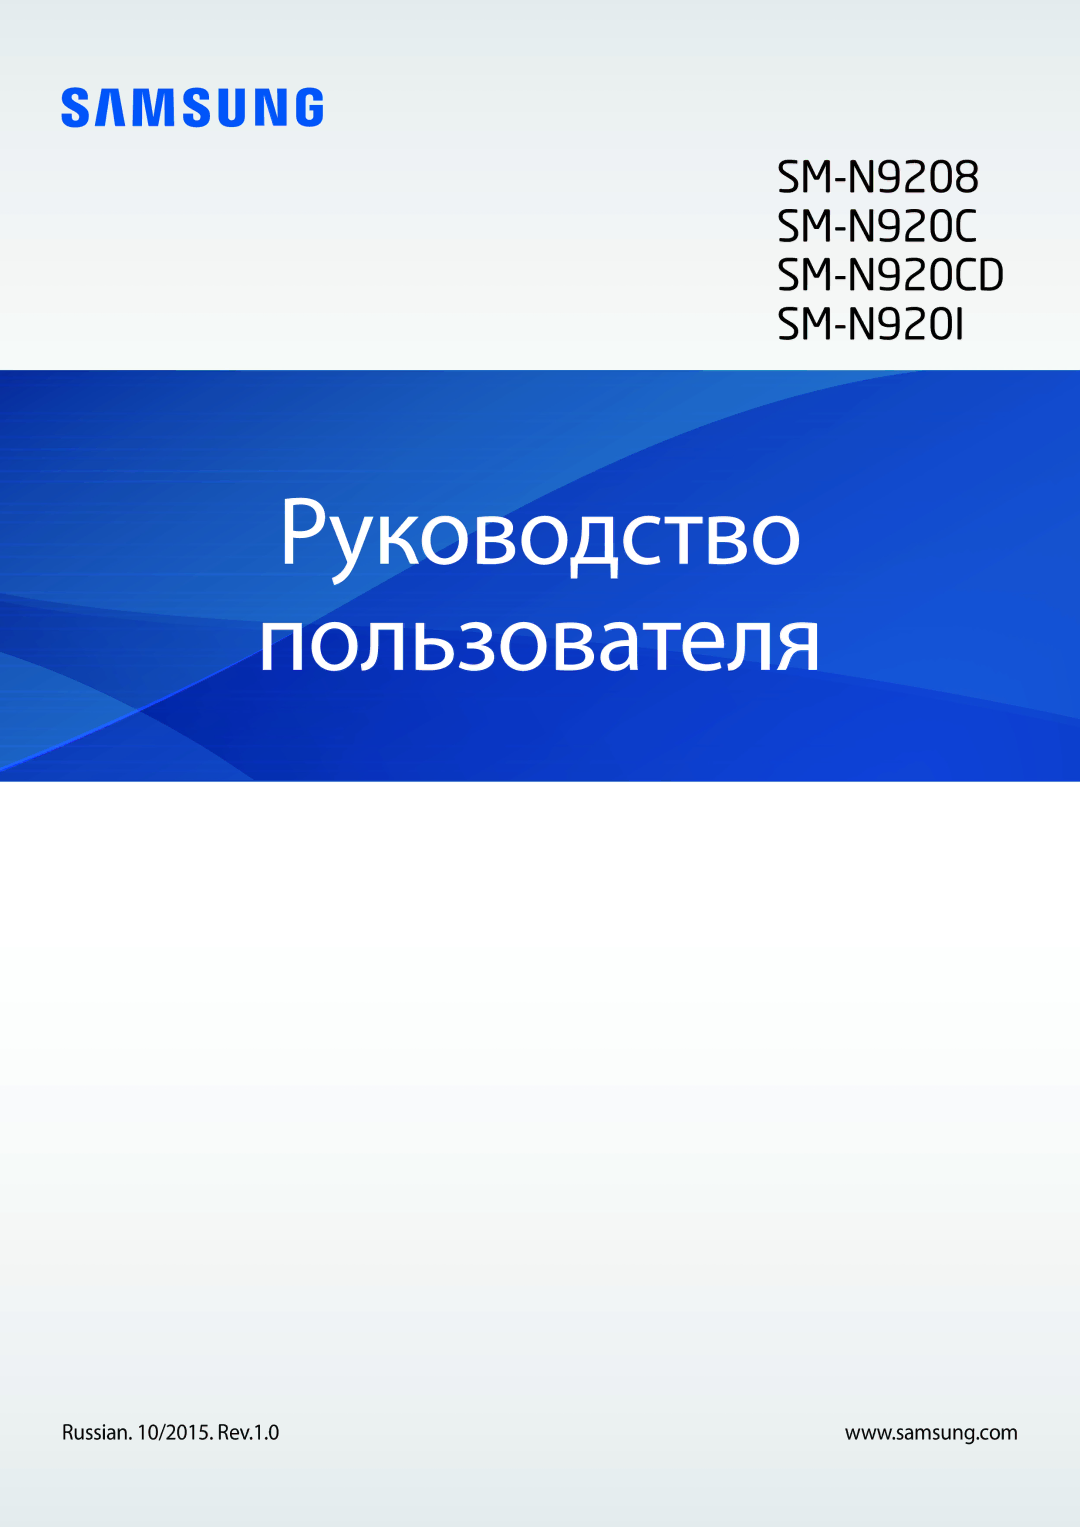 Samsung SM-N920CZDESER, SM-N920CZKESER, SM-N920CEDESER manual Руководство Пользователя, Russian /2015. Rev.1.0 